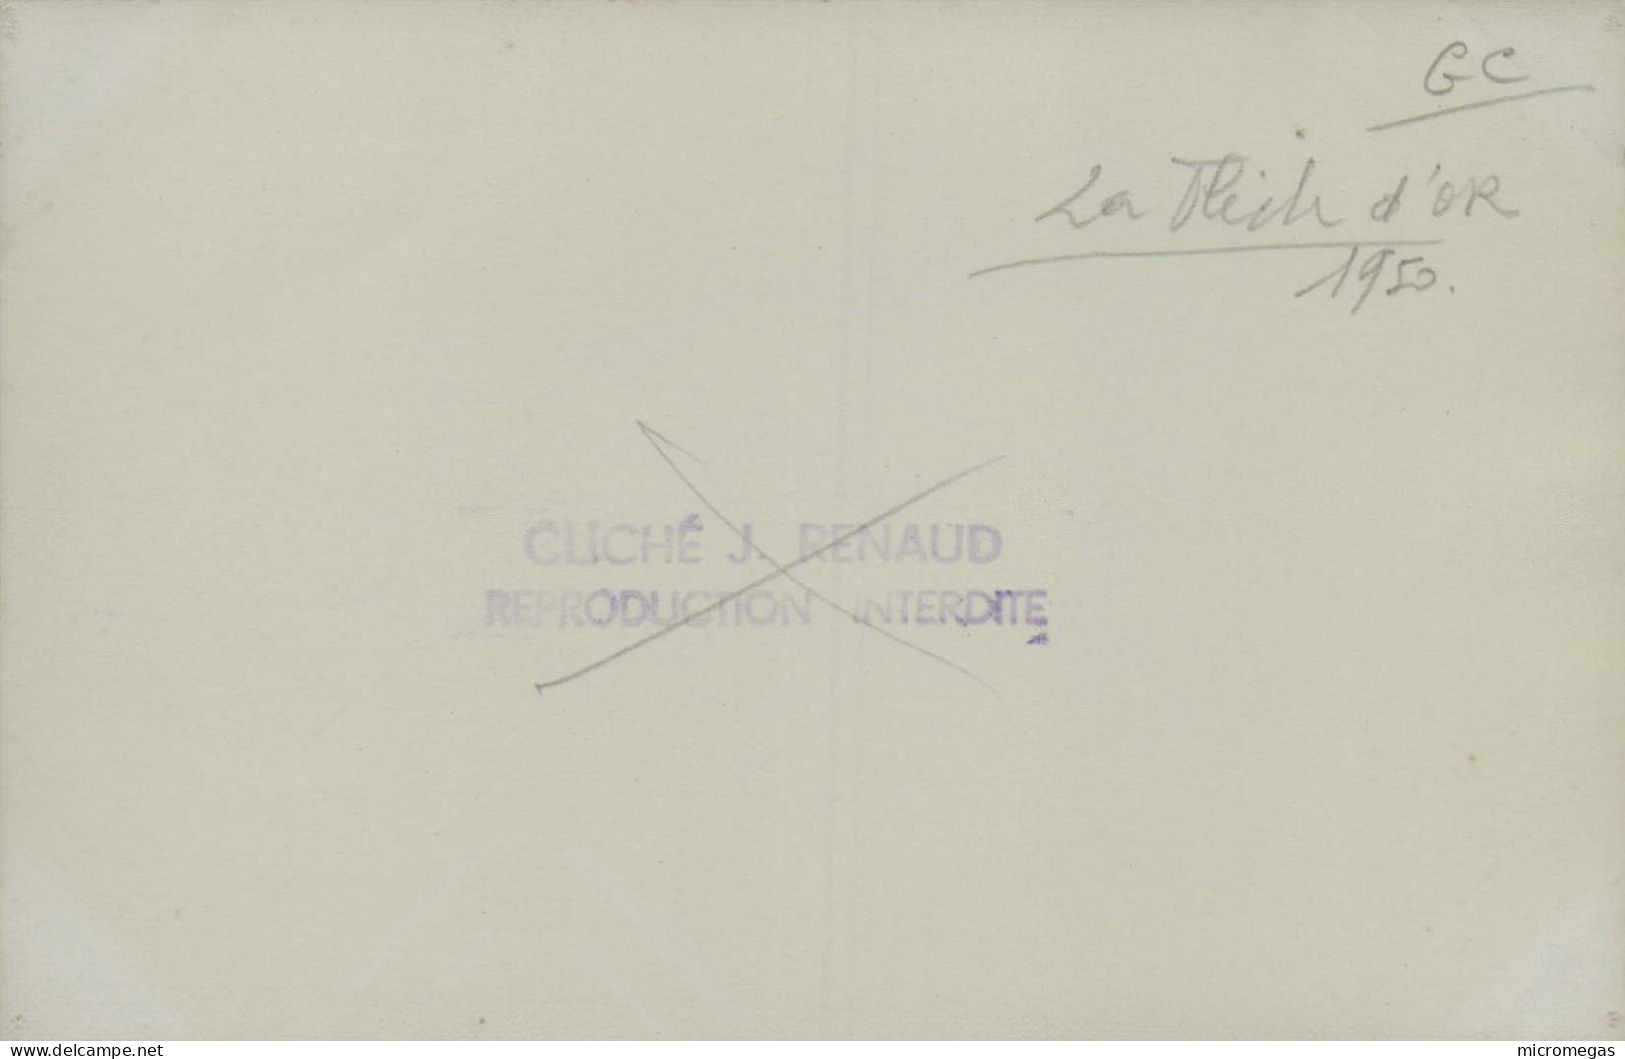 La Flèche D'Or - Cliché J. Renaud, 1950 - Eisenbahnen